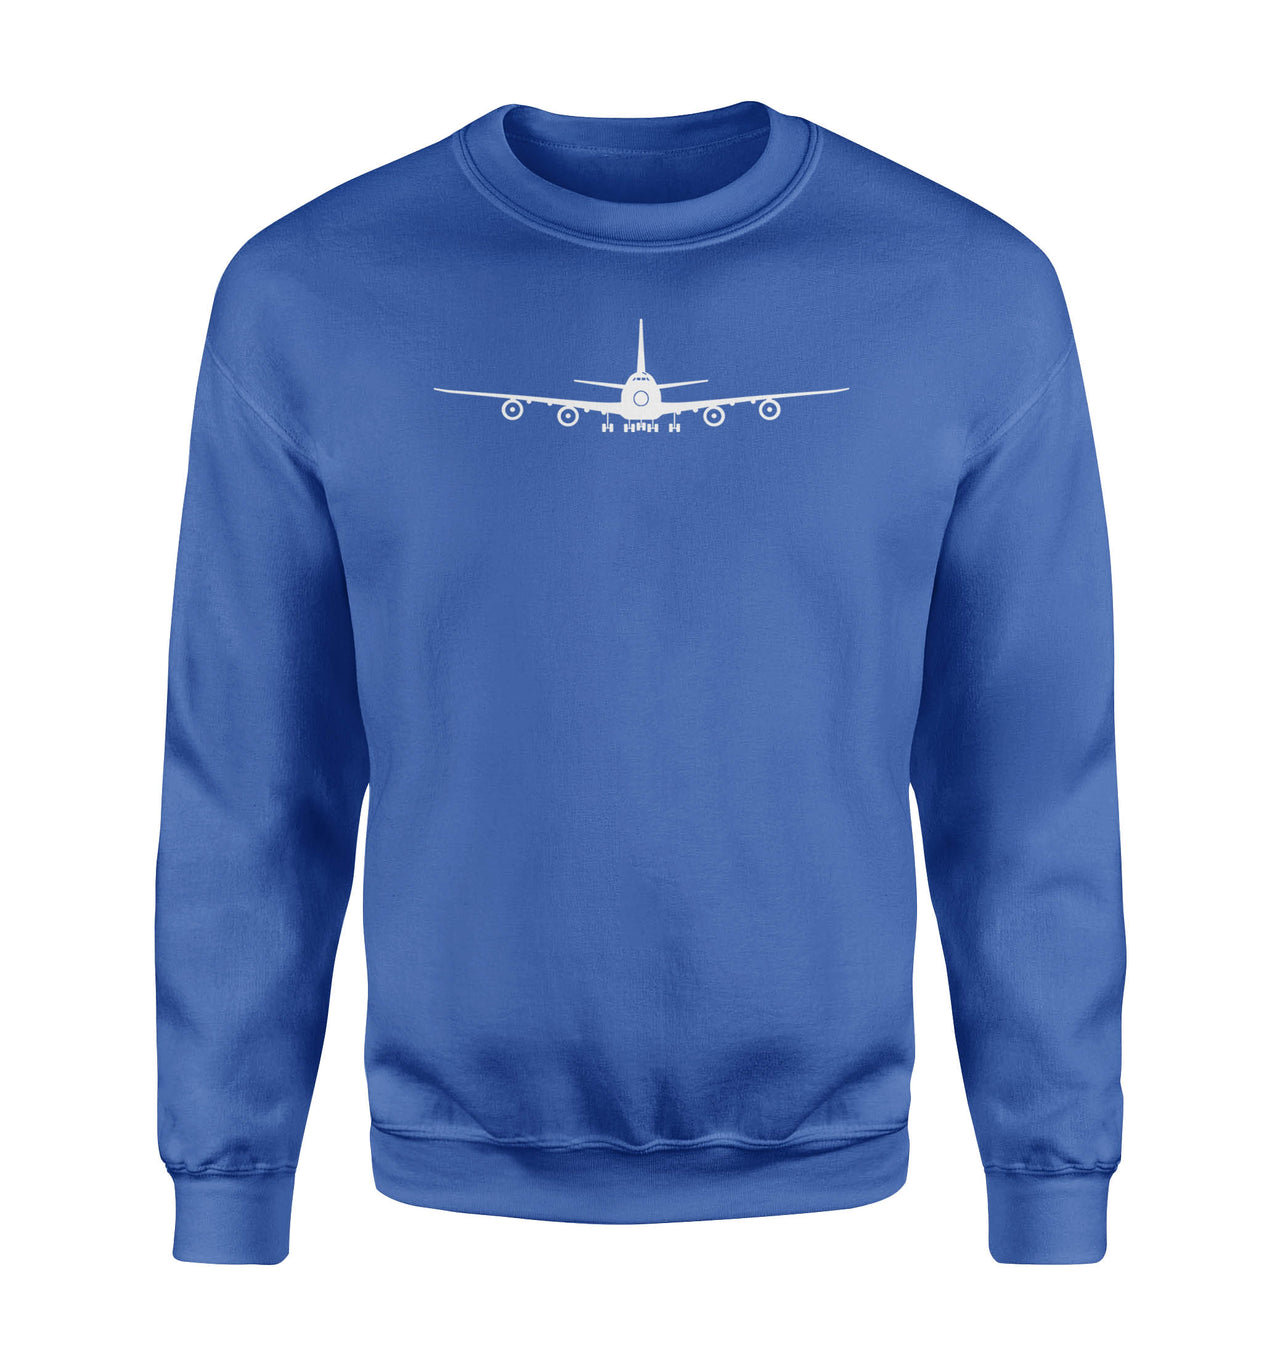 Boeing 747 Silhouette Designed Sweatshirts